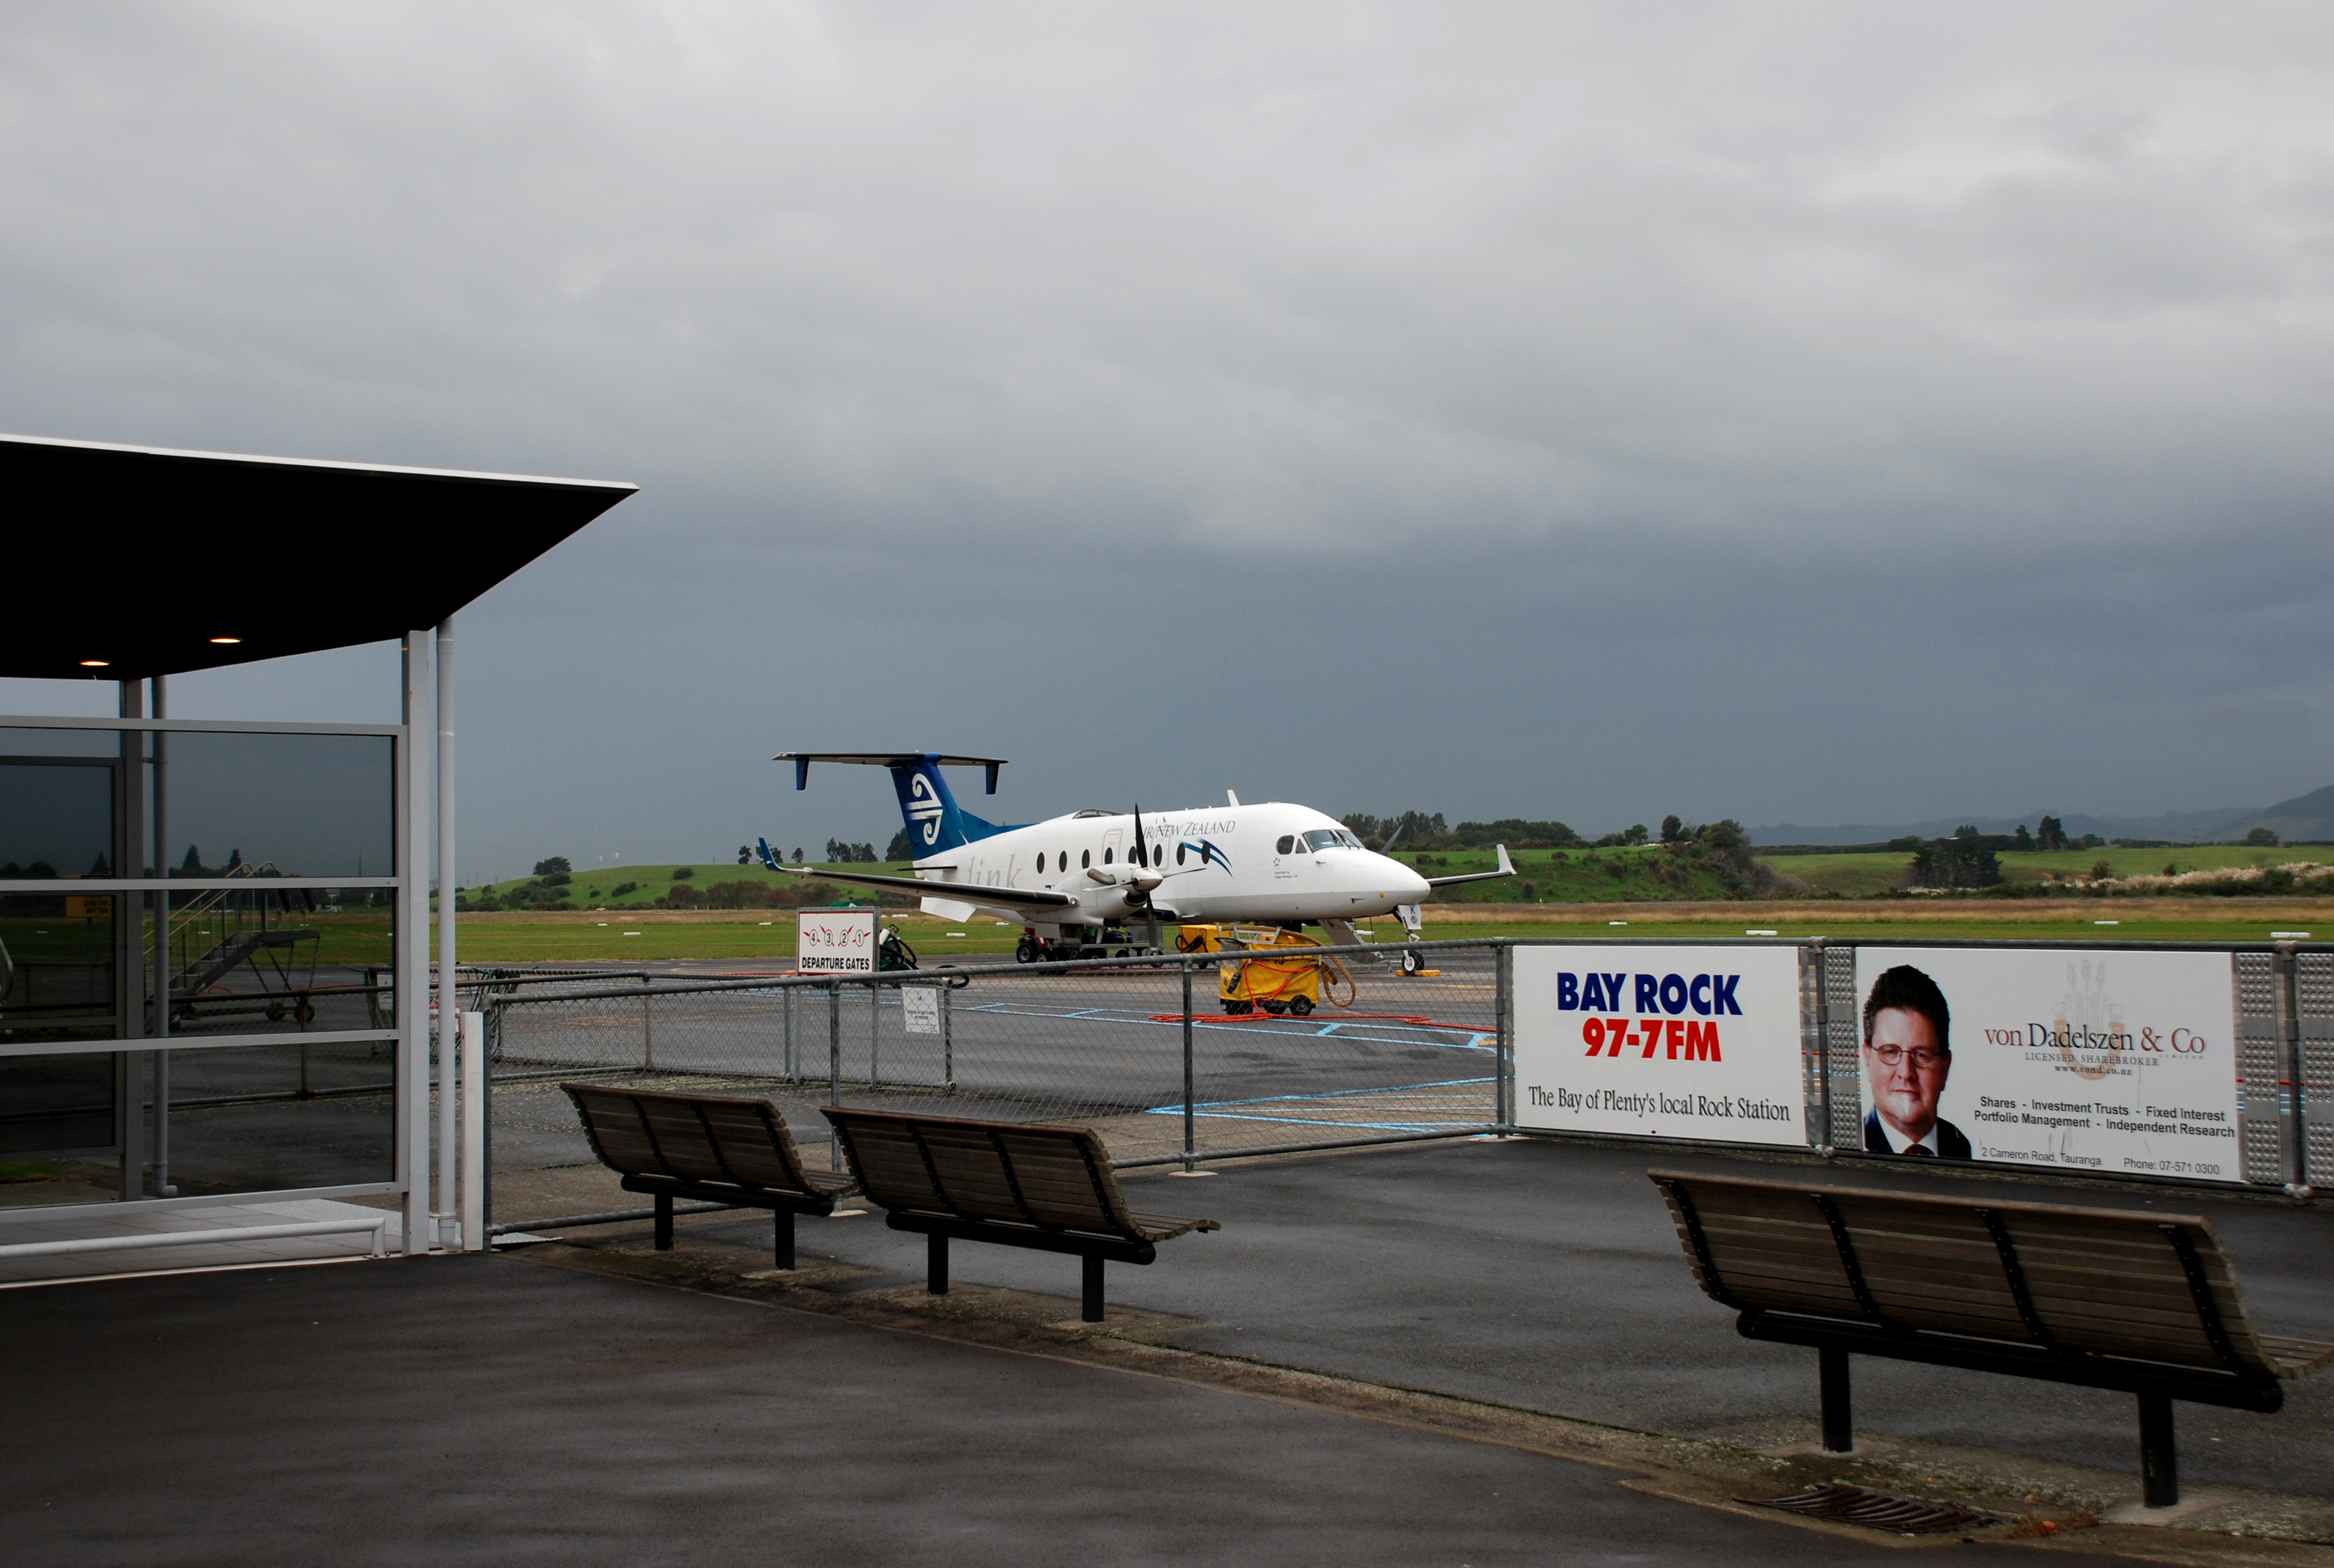 Tauranga Airport, Bay of Plenty, New Zealand, 21 May 2007